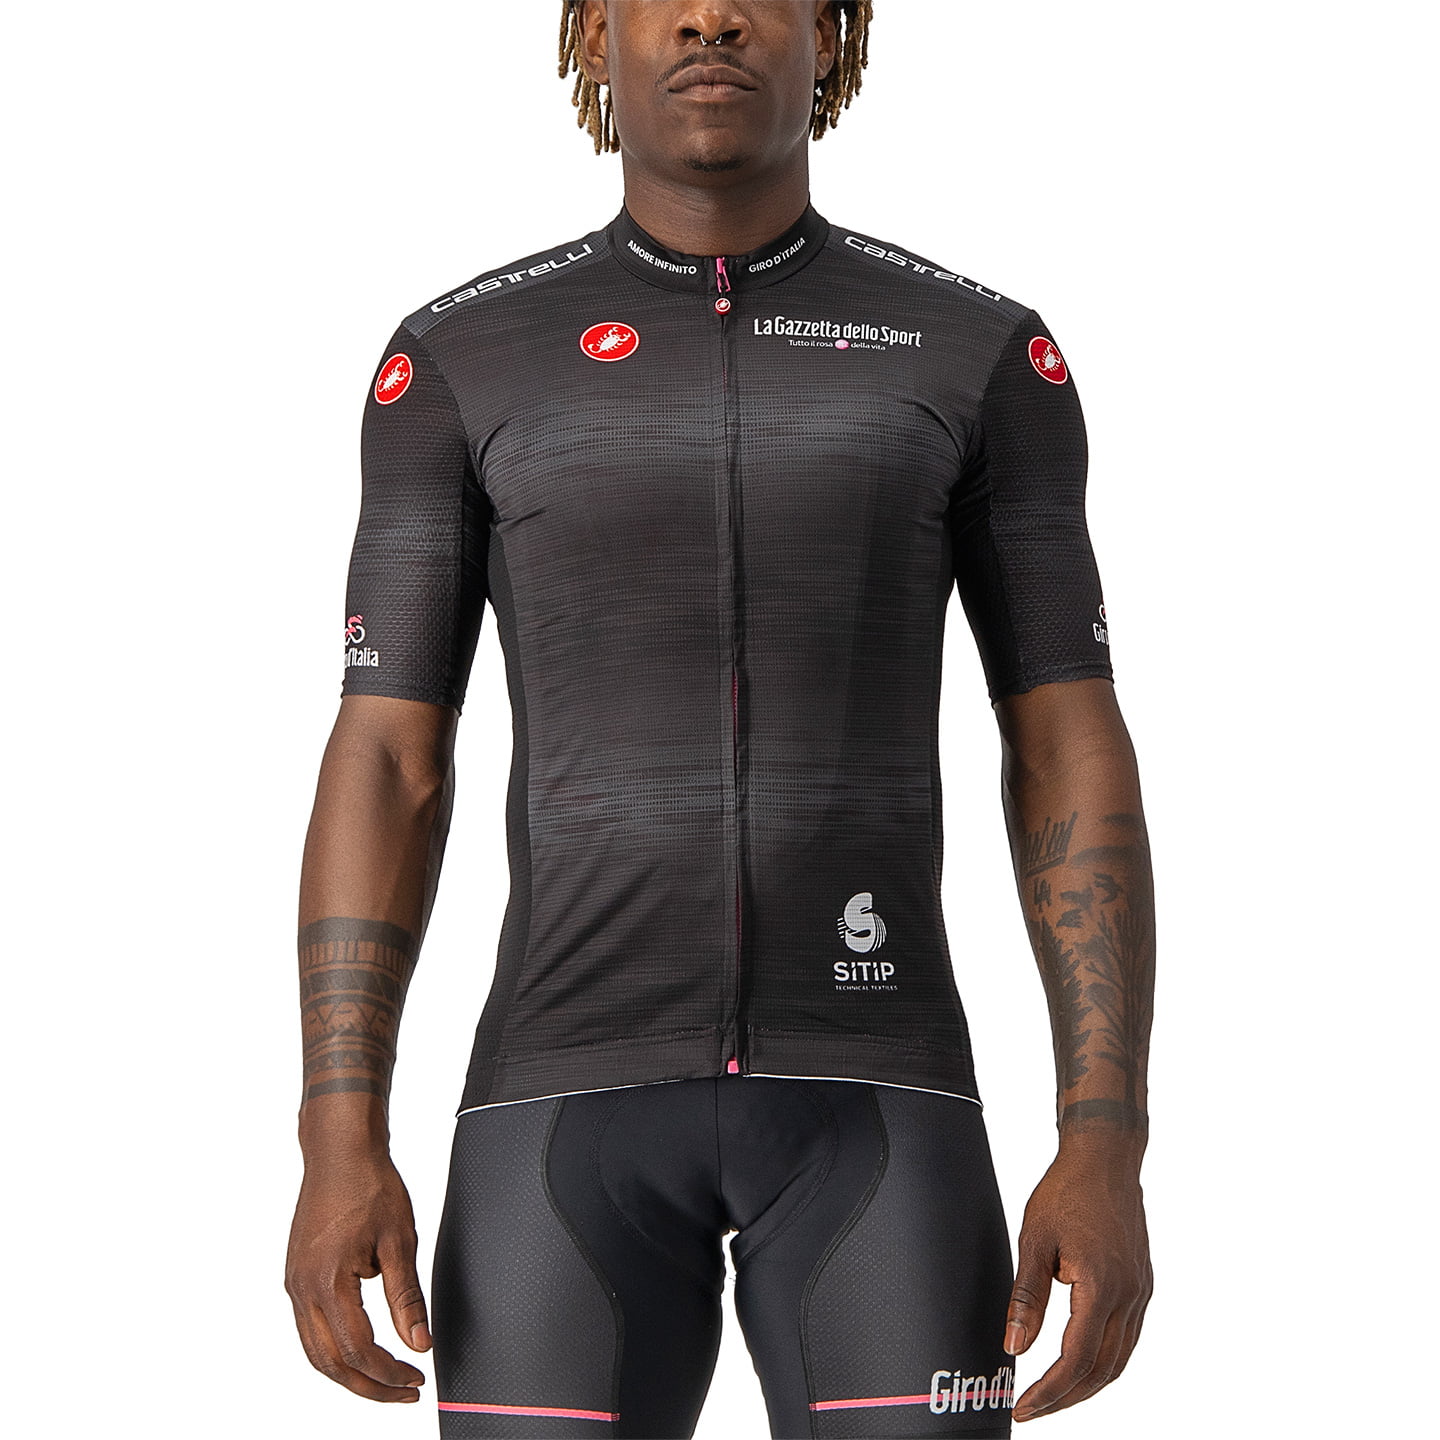 GIRO D’ITALIA Maglia Nera 2022 Short Sleeve Jersey, for men, size S, Cycling jersey, Cycling clothing